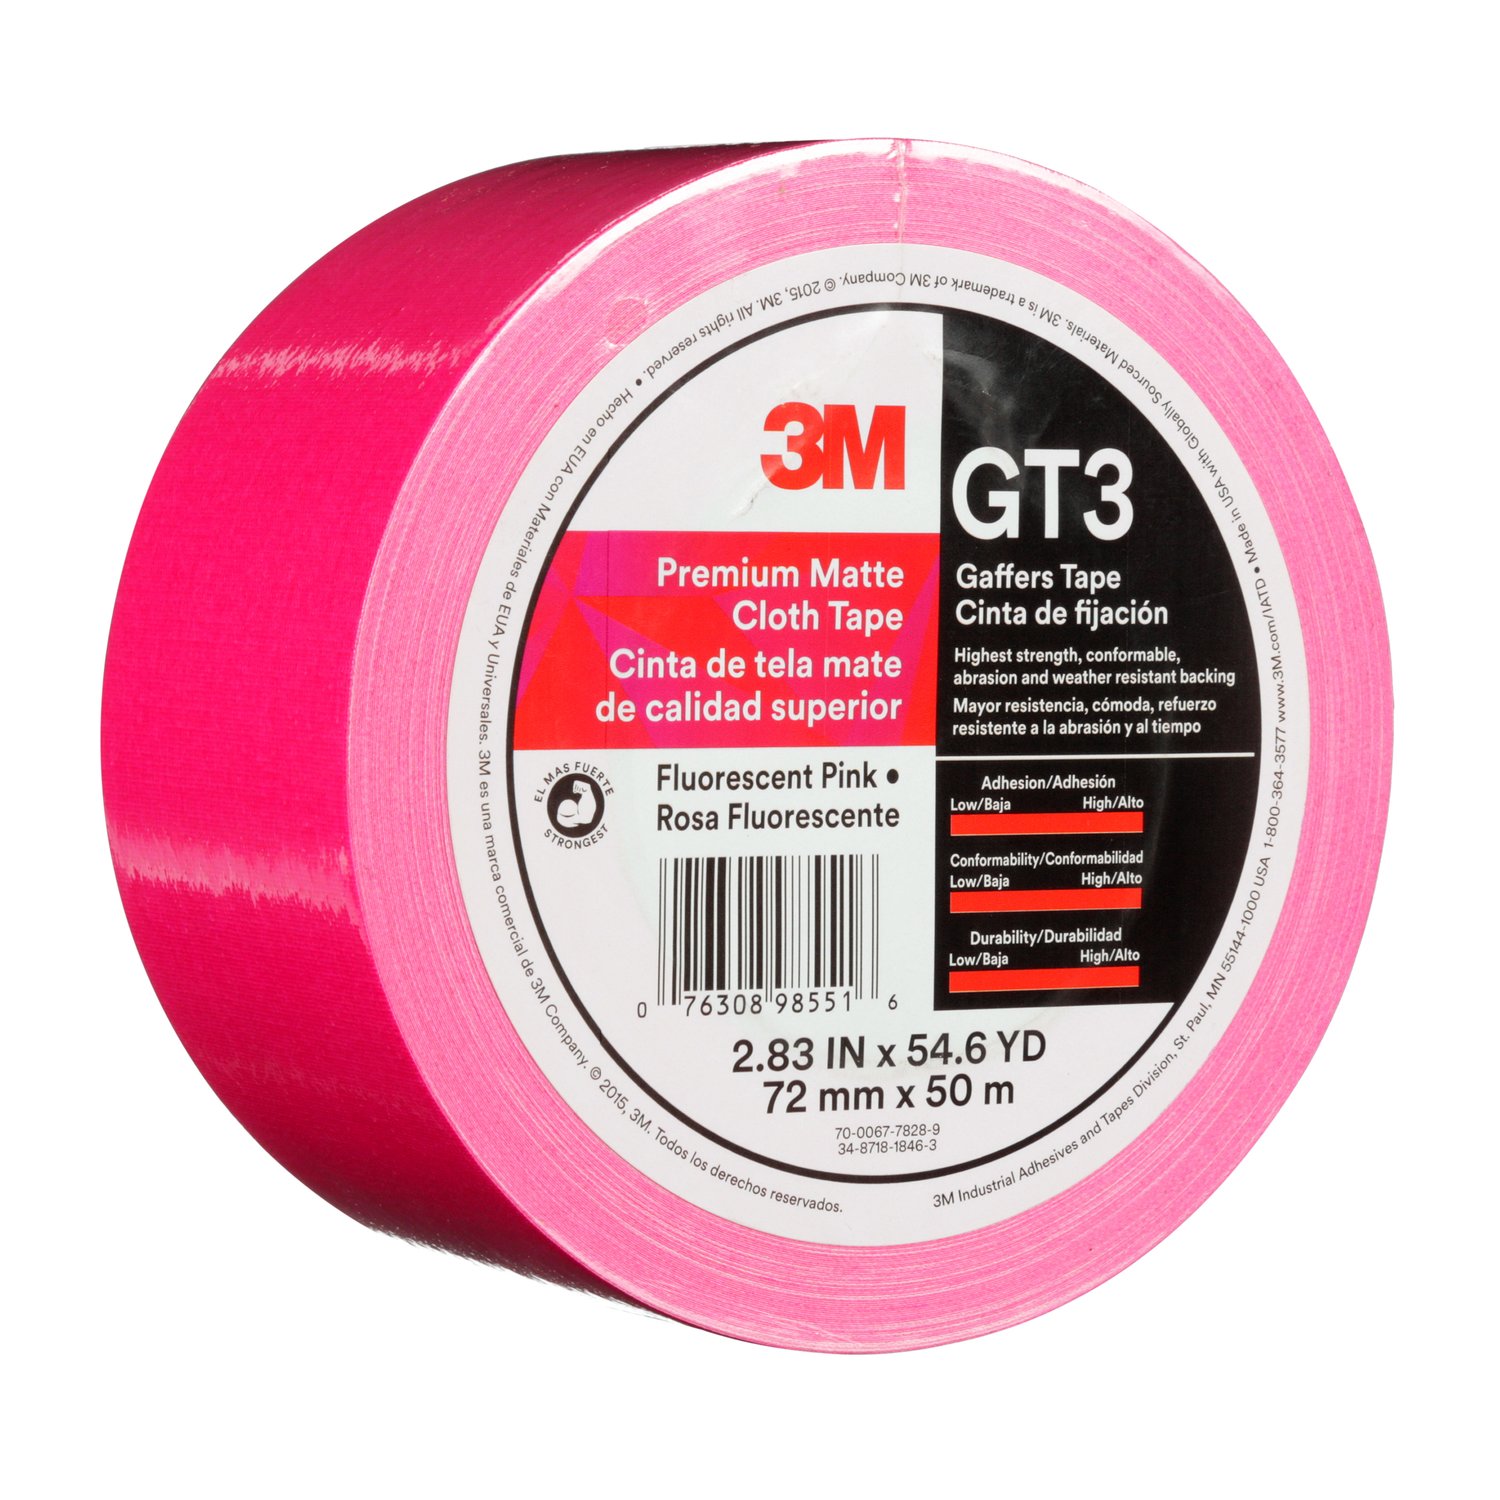 7010336142 - 3M Premium Matte Cloth (Gaffers) Tape GT3, Fluorescent Pink, 72 mm x 50
m, 11 mil, 16/Case